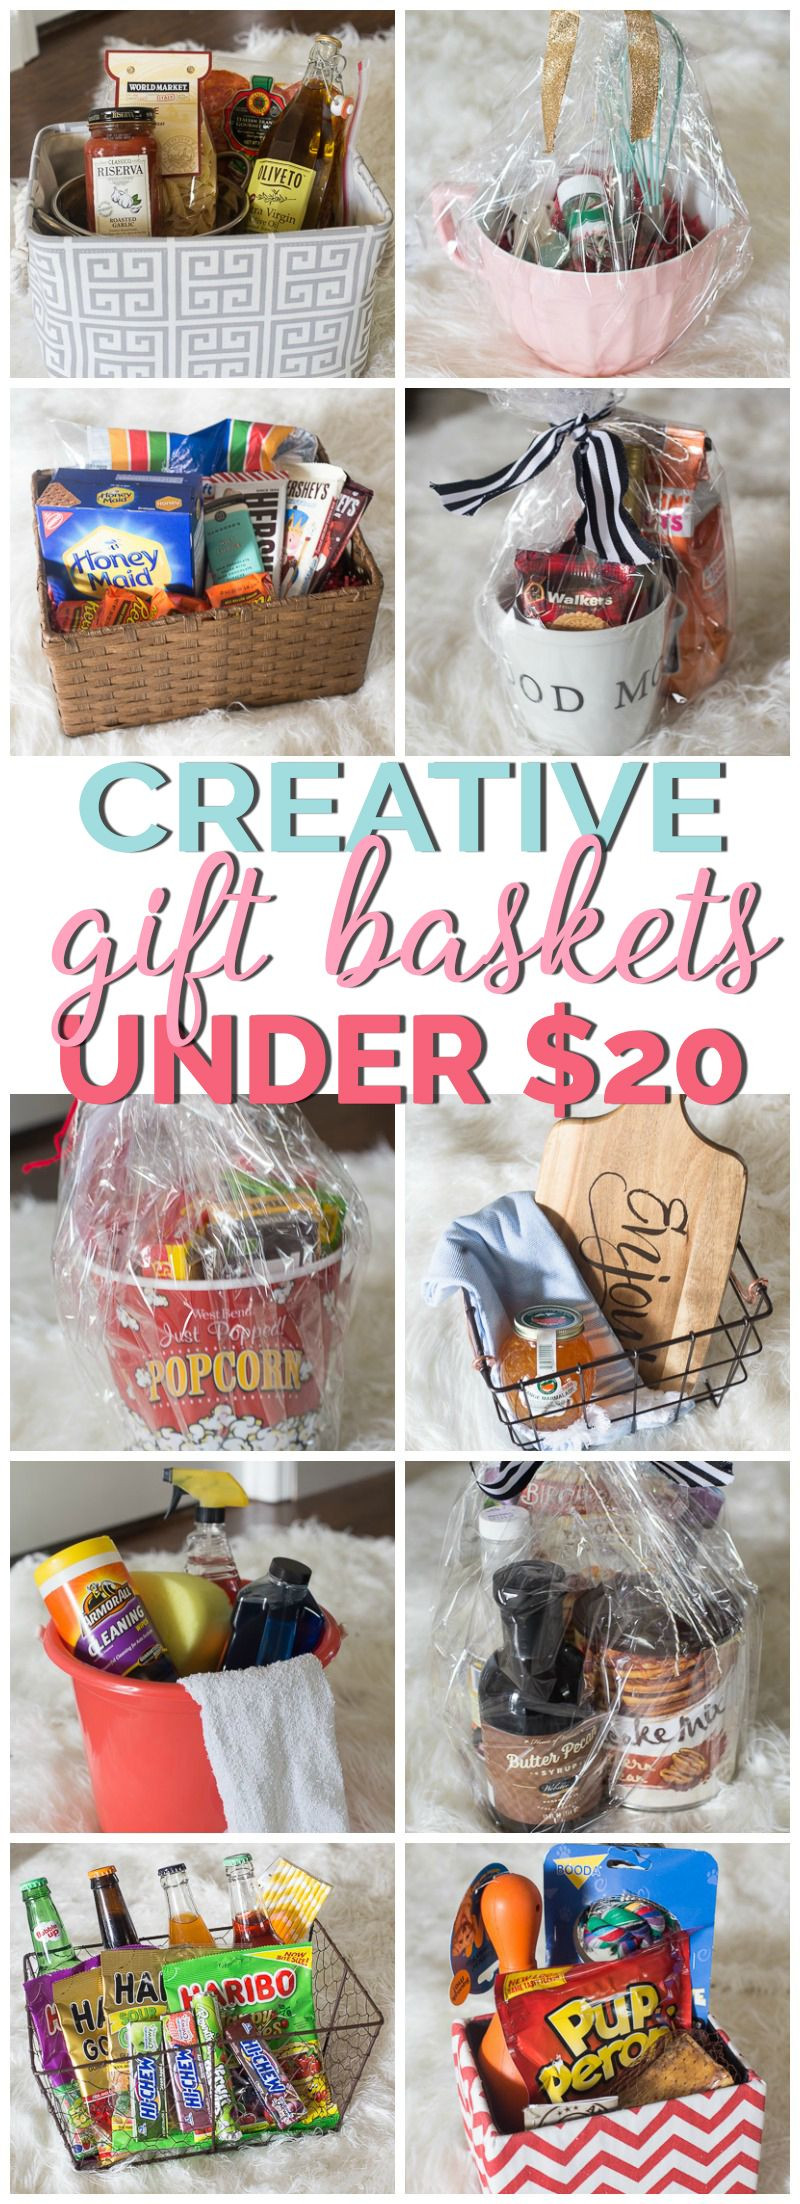 Gift Basket Raffle Ideas
 Creative Gift Basket Ideas Under $20